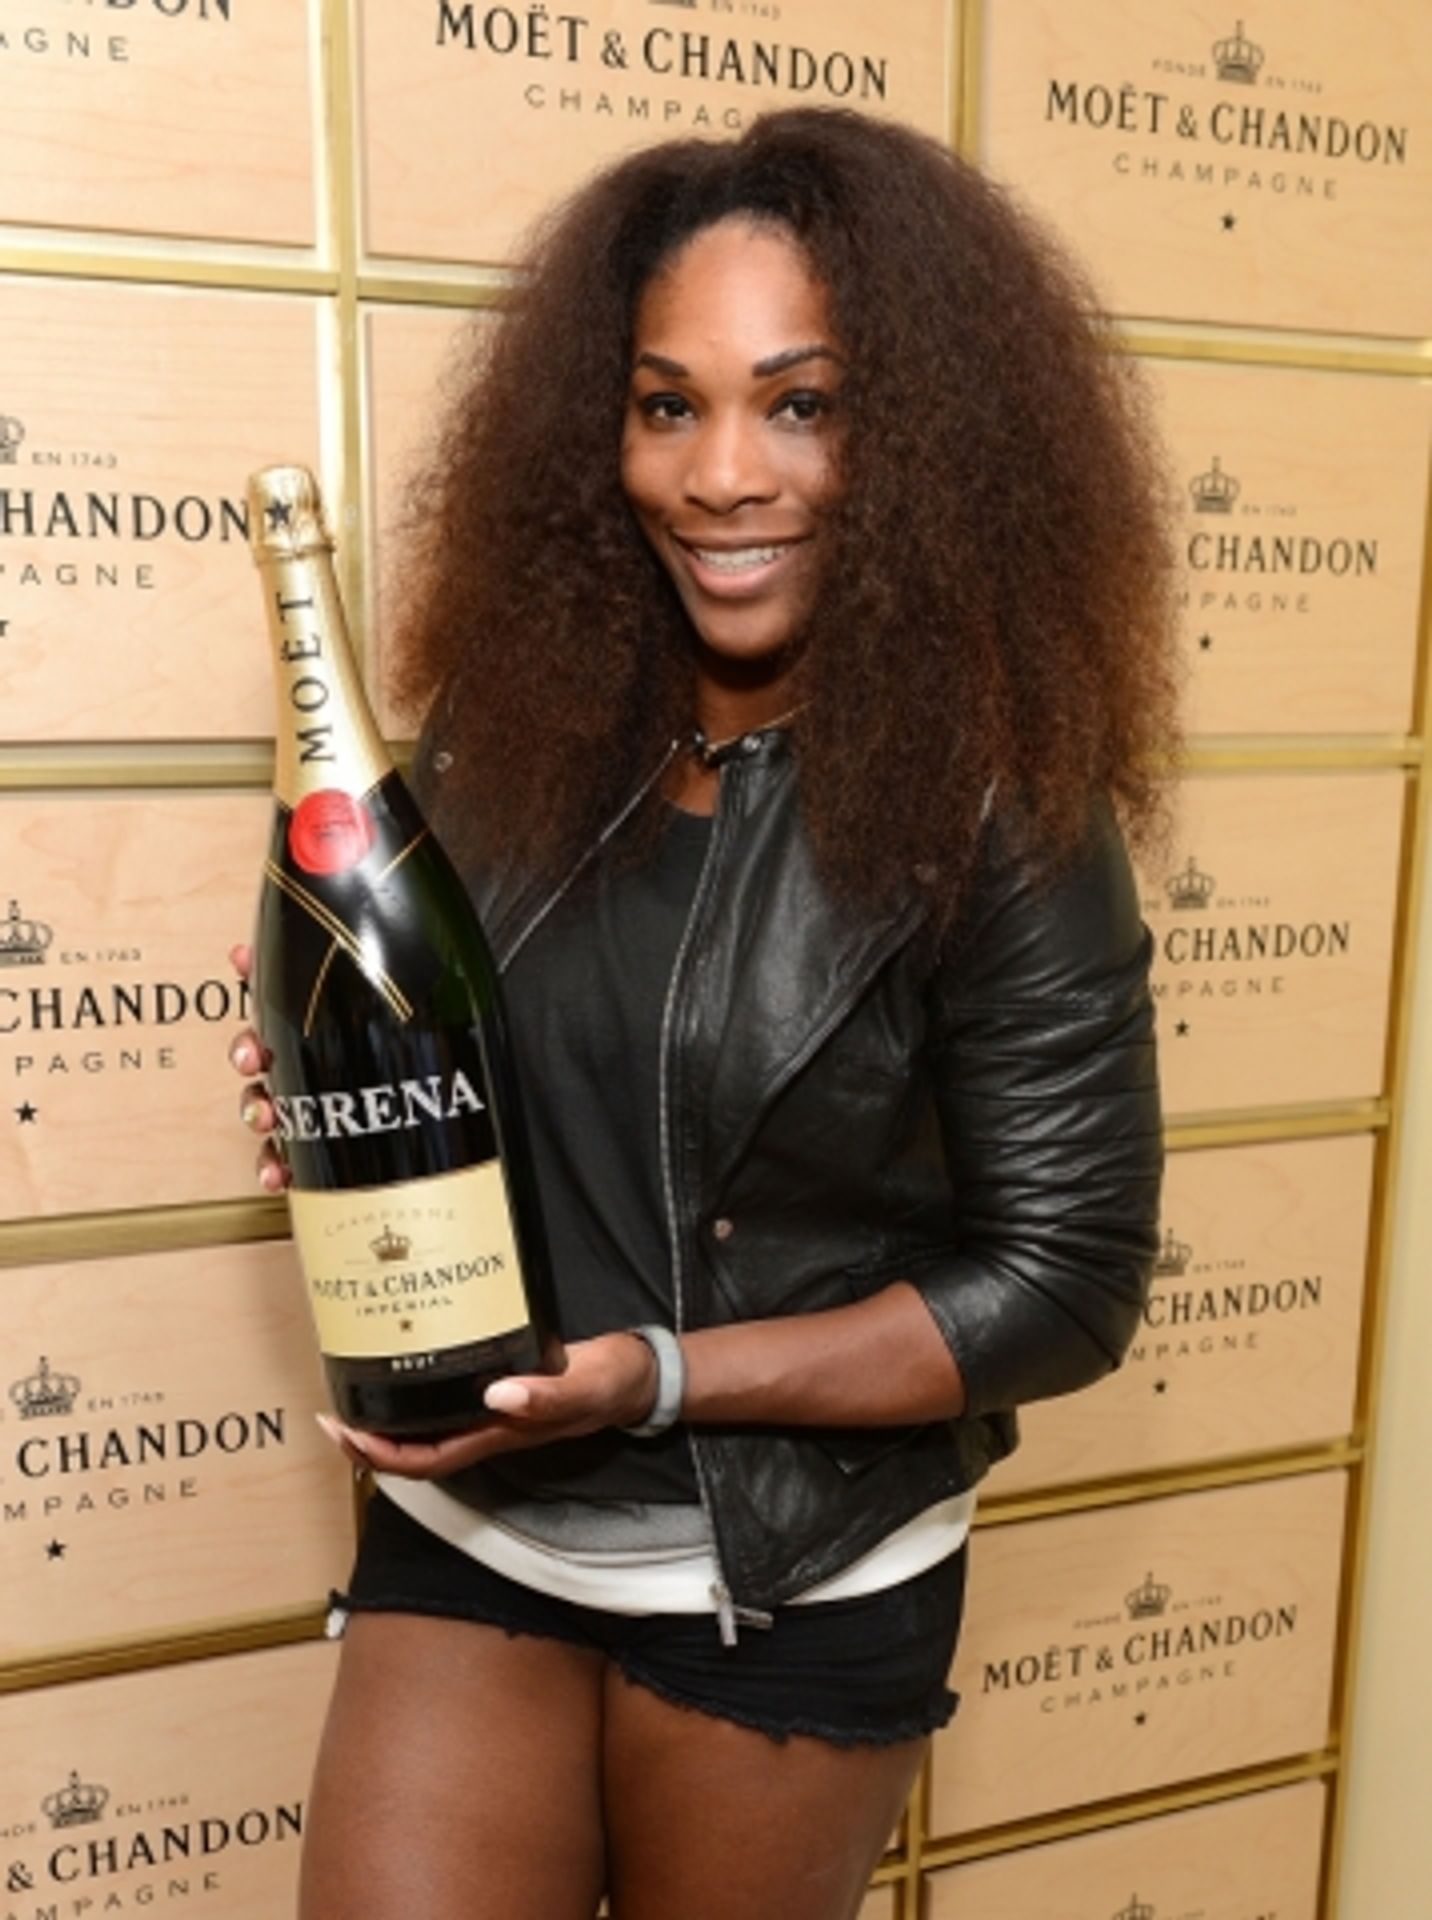 Serena šampáňo - GALERIE: Serena Williams pózuje před mrakodrapy (12/14)